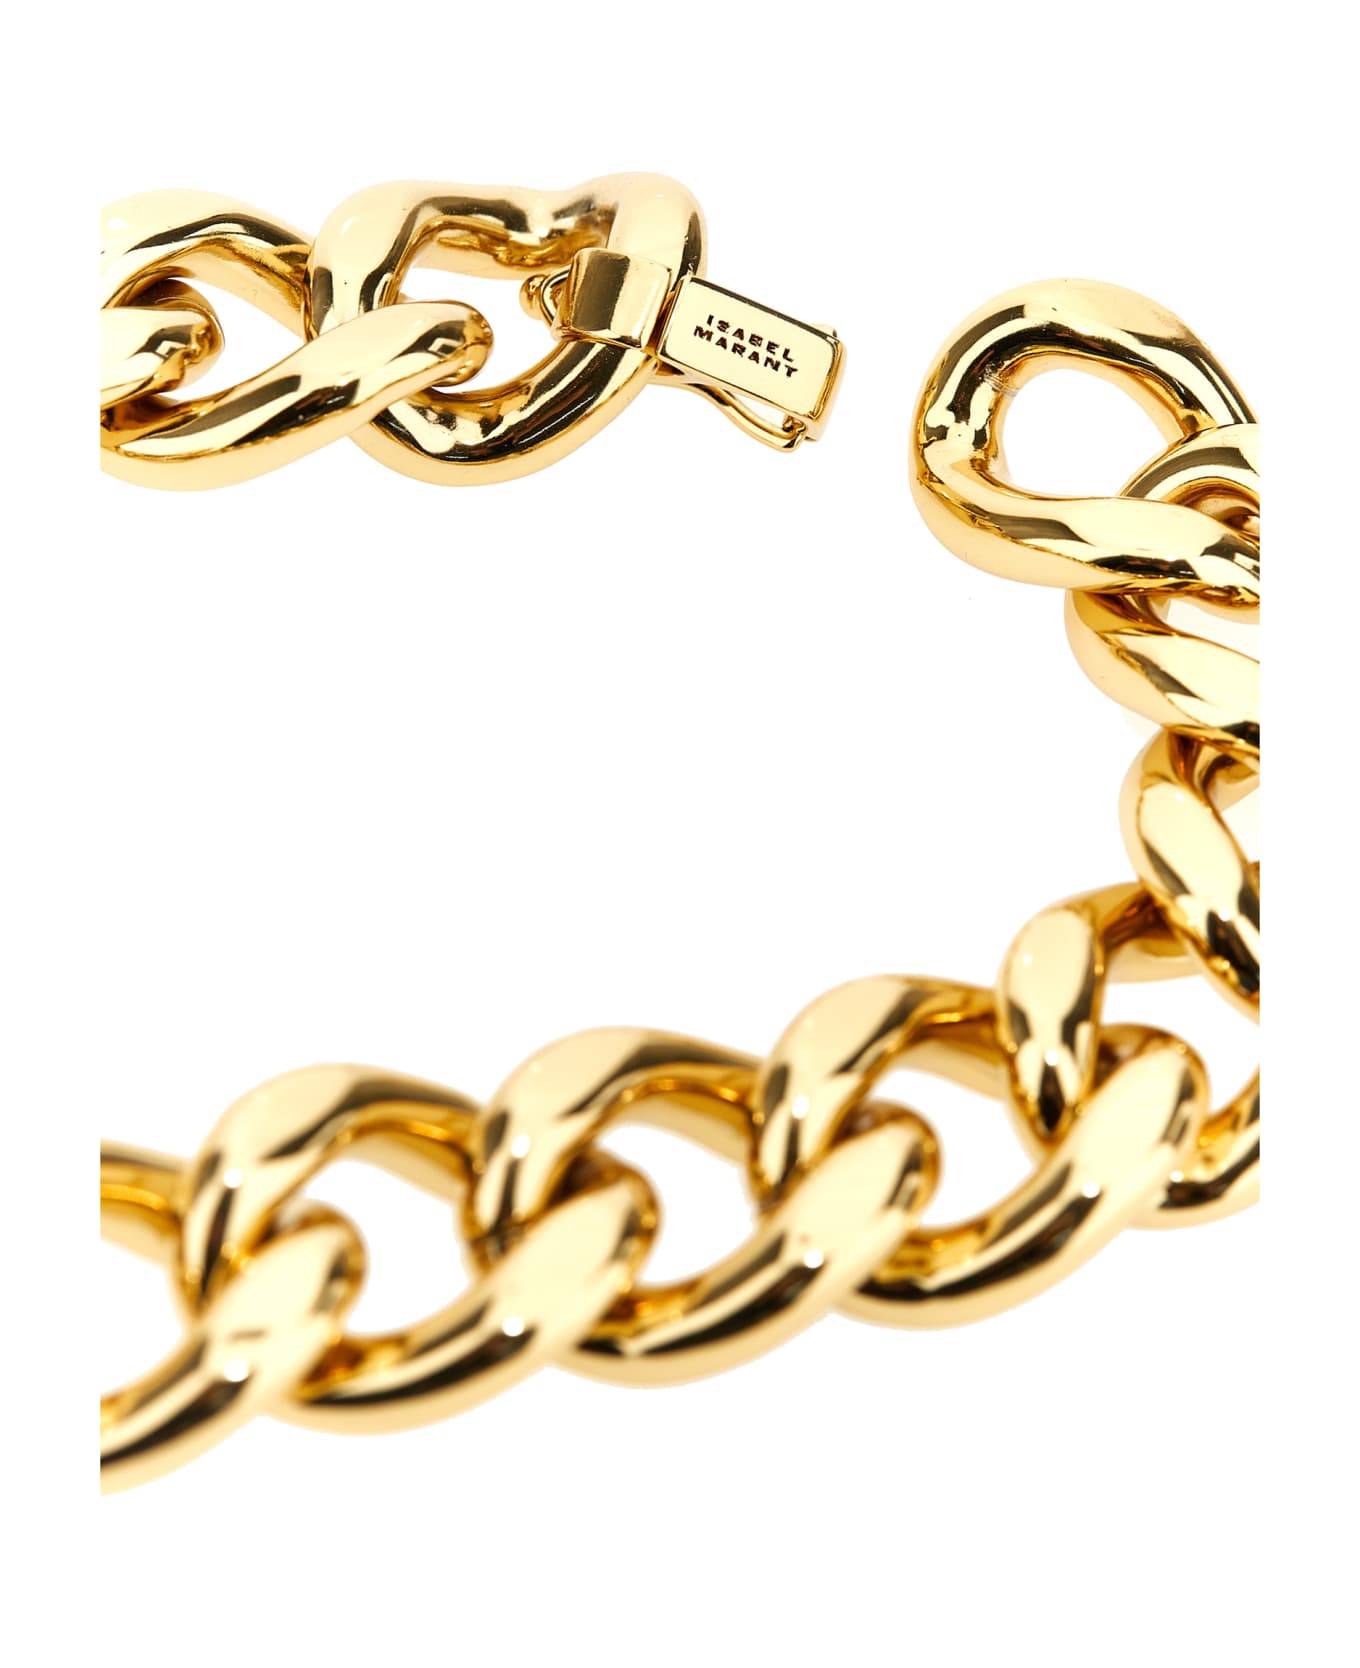 Isabel Marant 'dore' Necklace - Gold